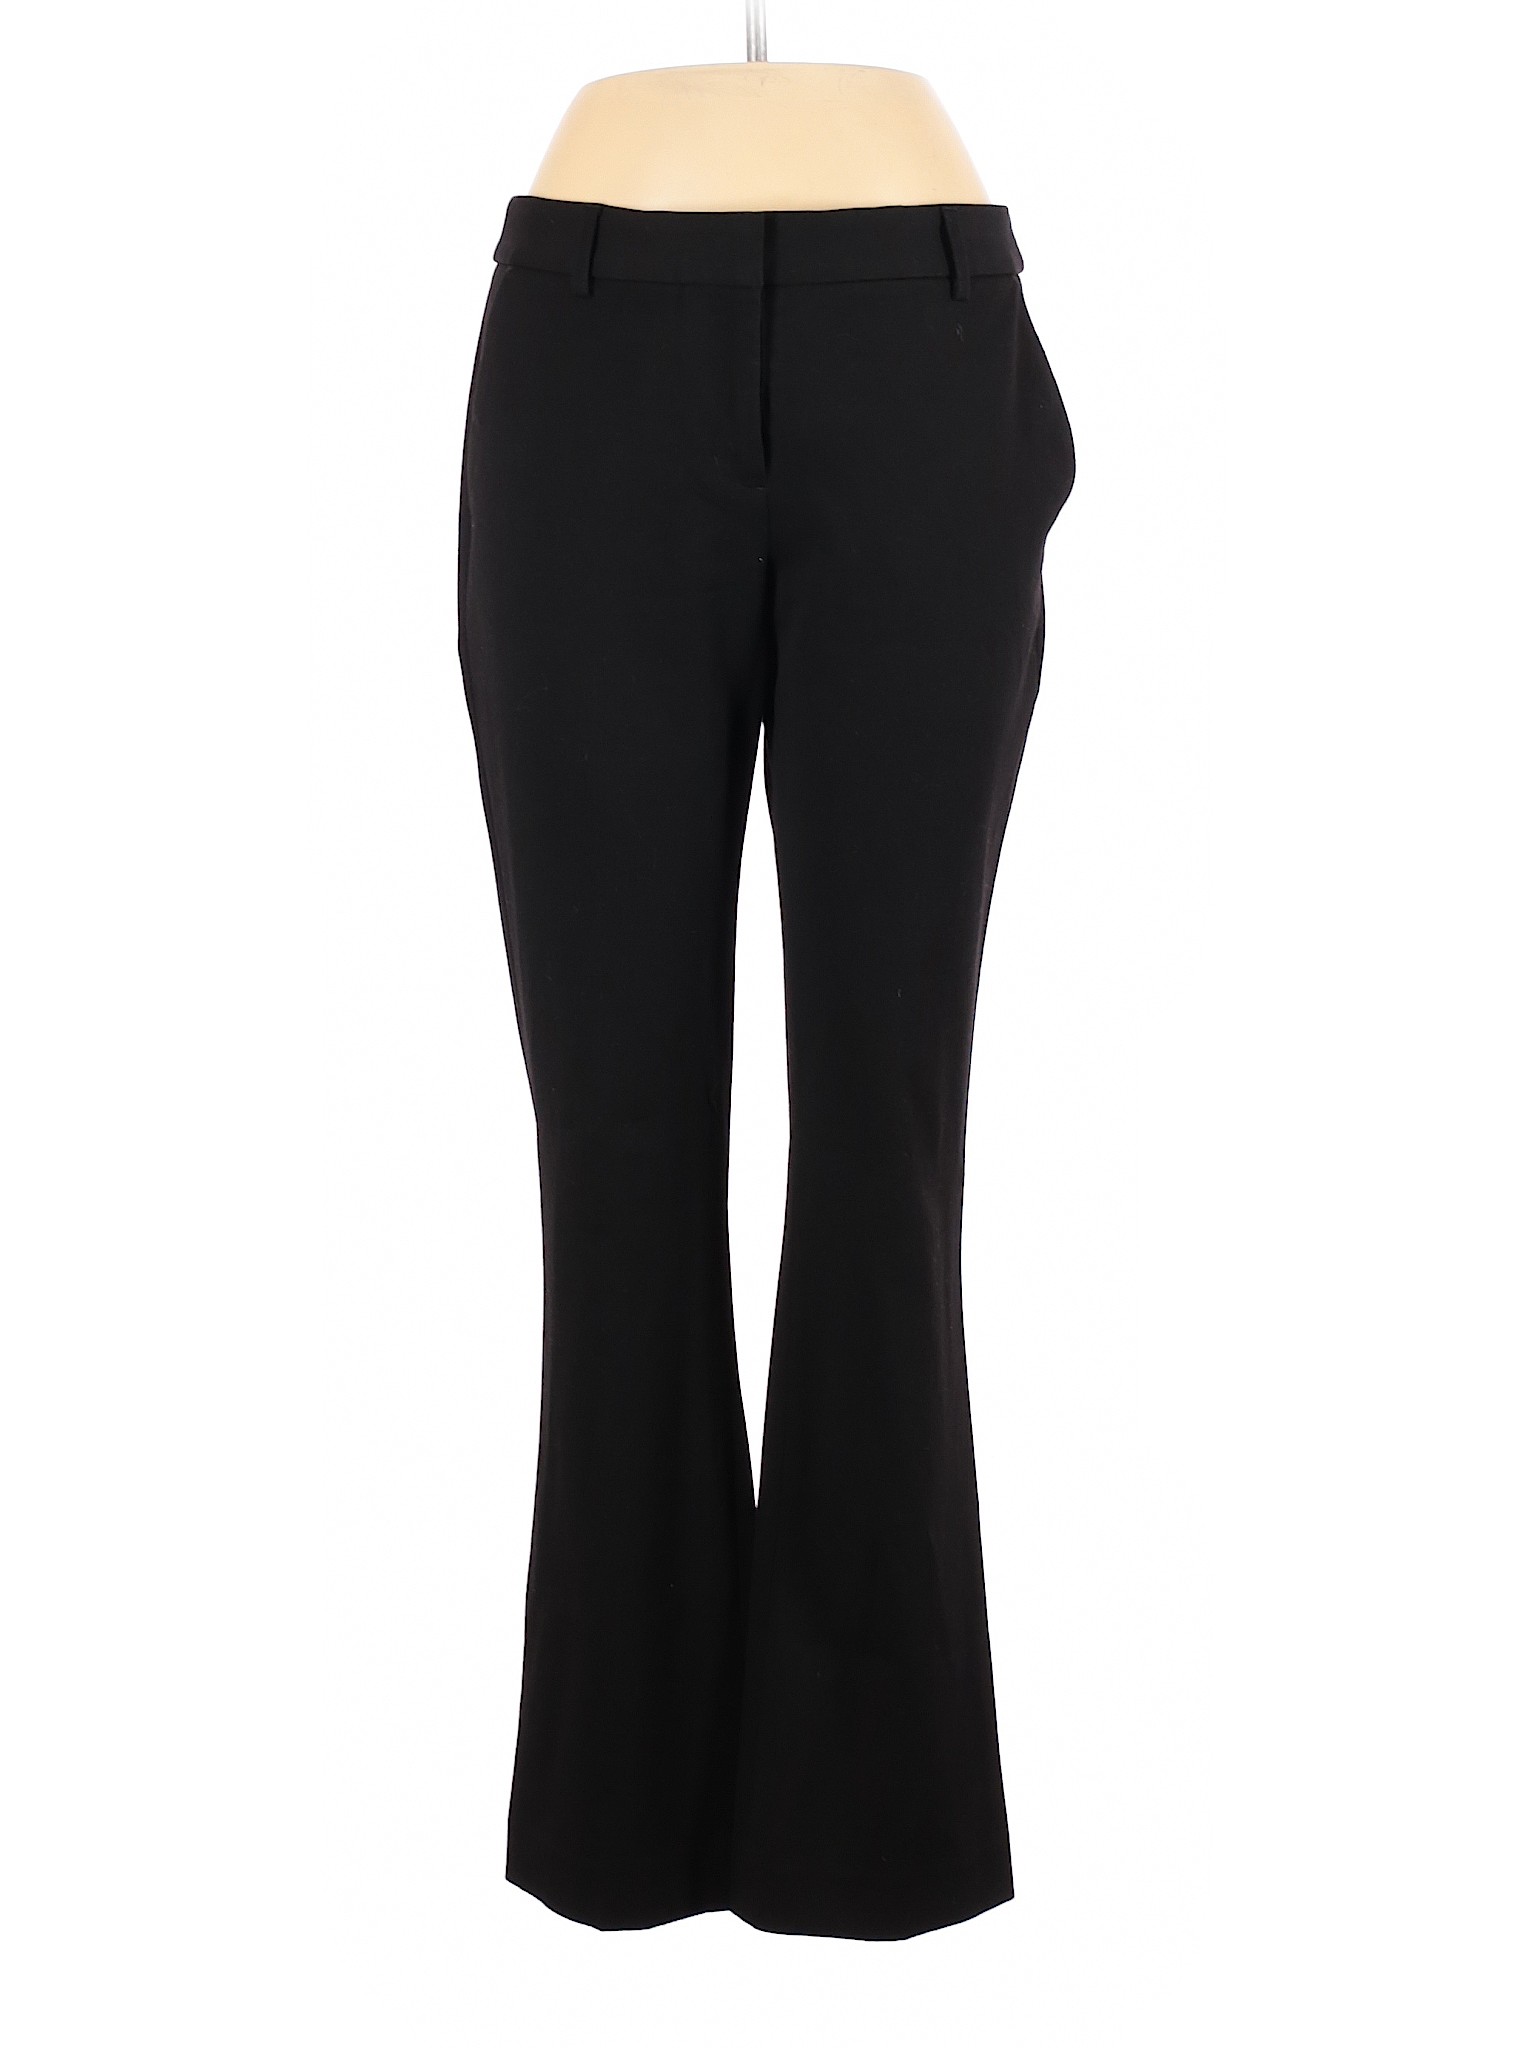 Express Women Black Dress Pants 8 | eBay